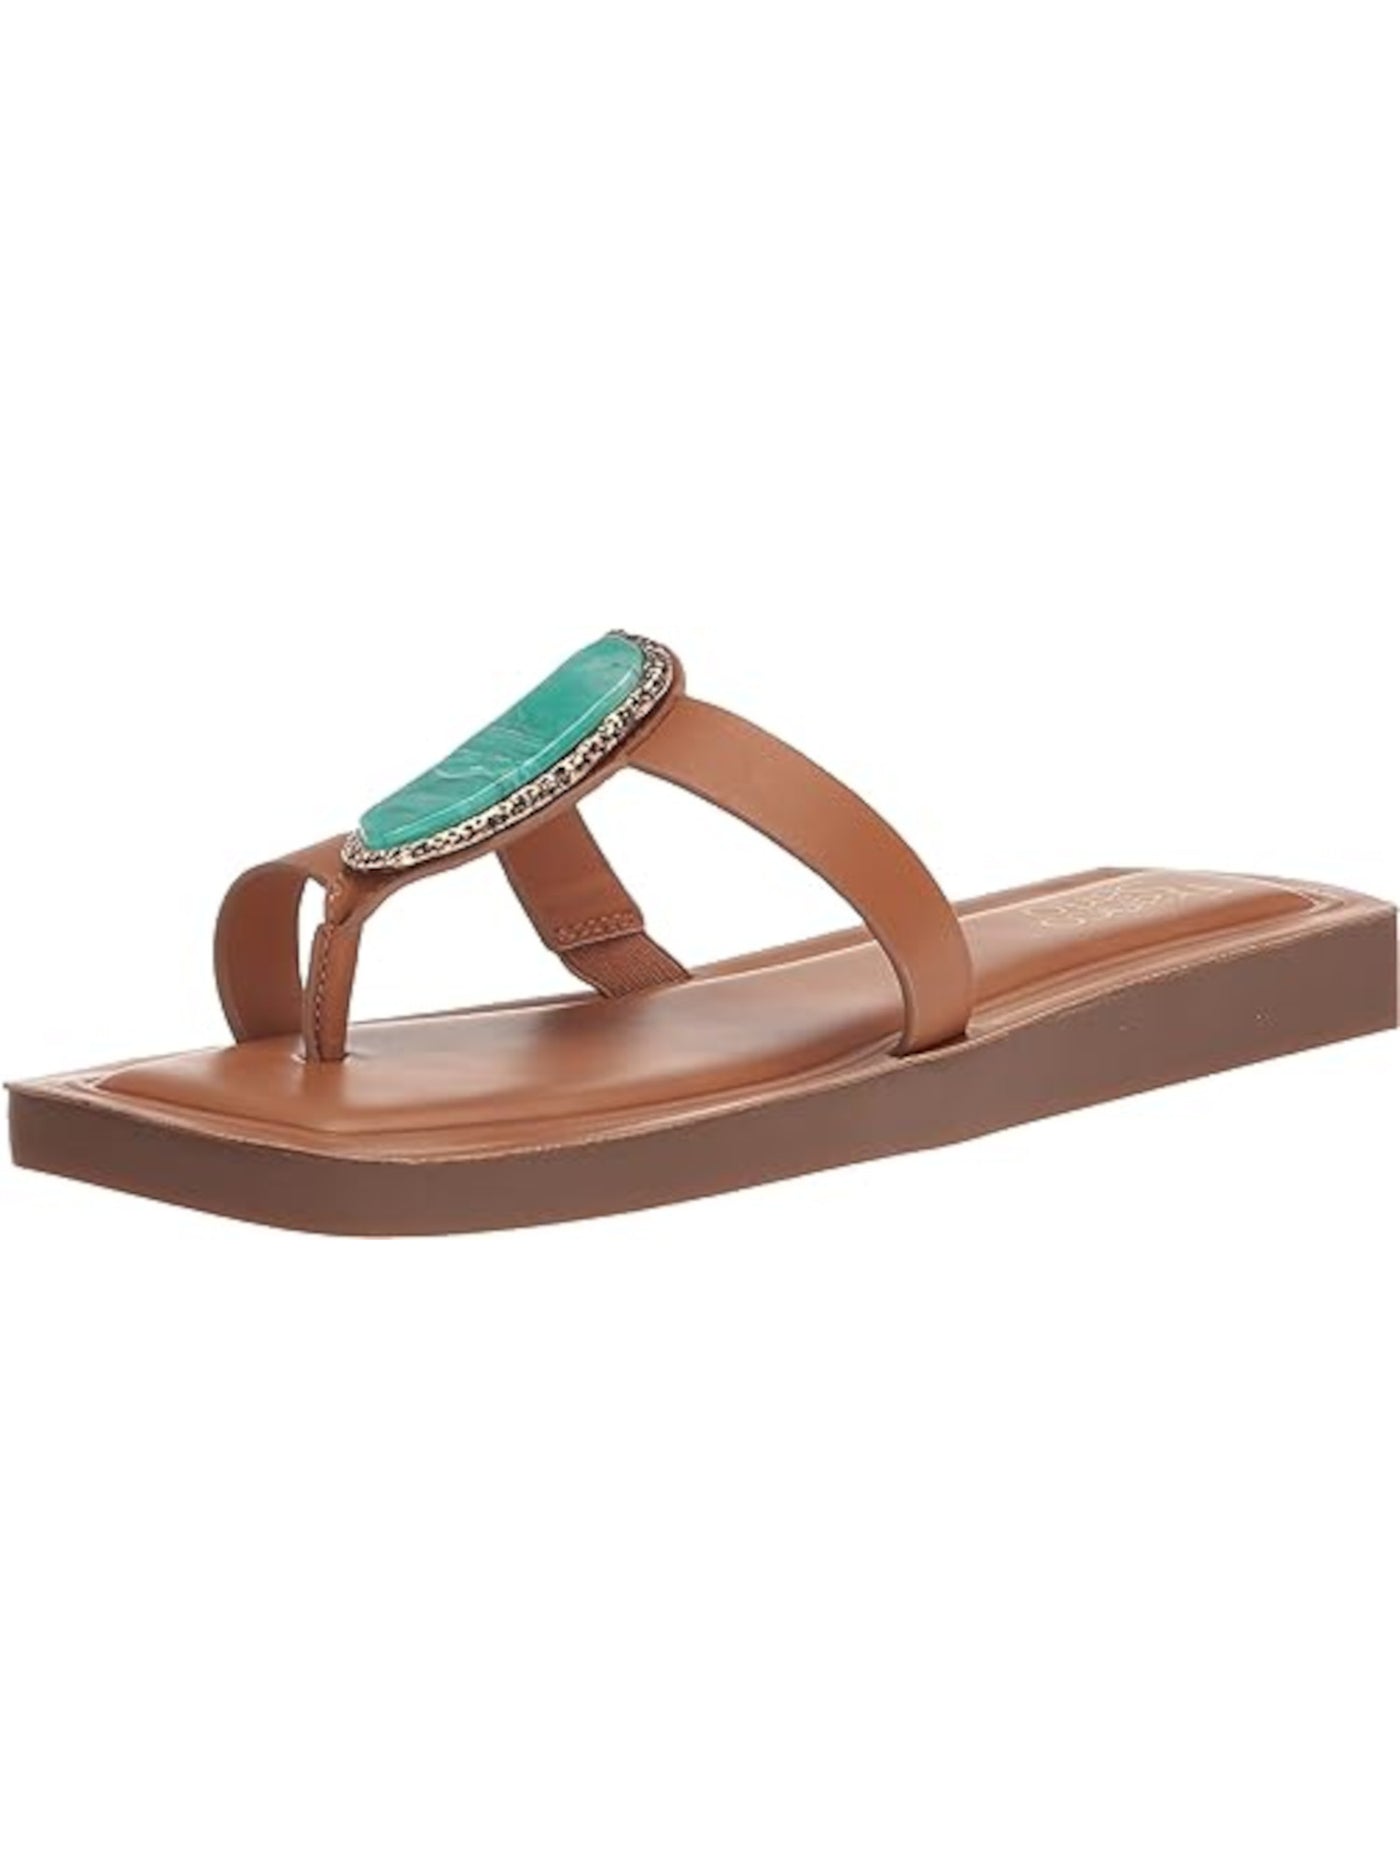 FRANCO SARTO Womens Brown Asymmetrical Embellished Capri Square Toe Slip On Flip Flop Sandal 9.5 M